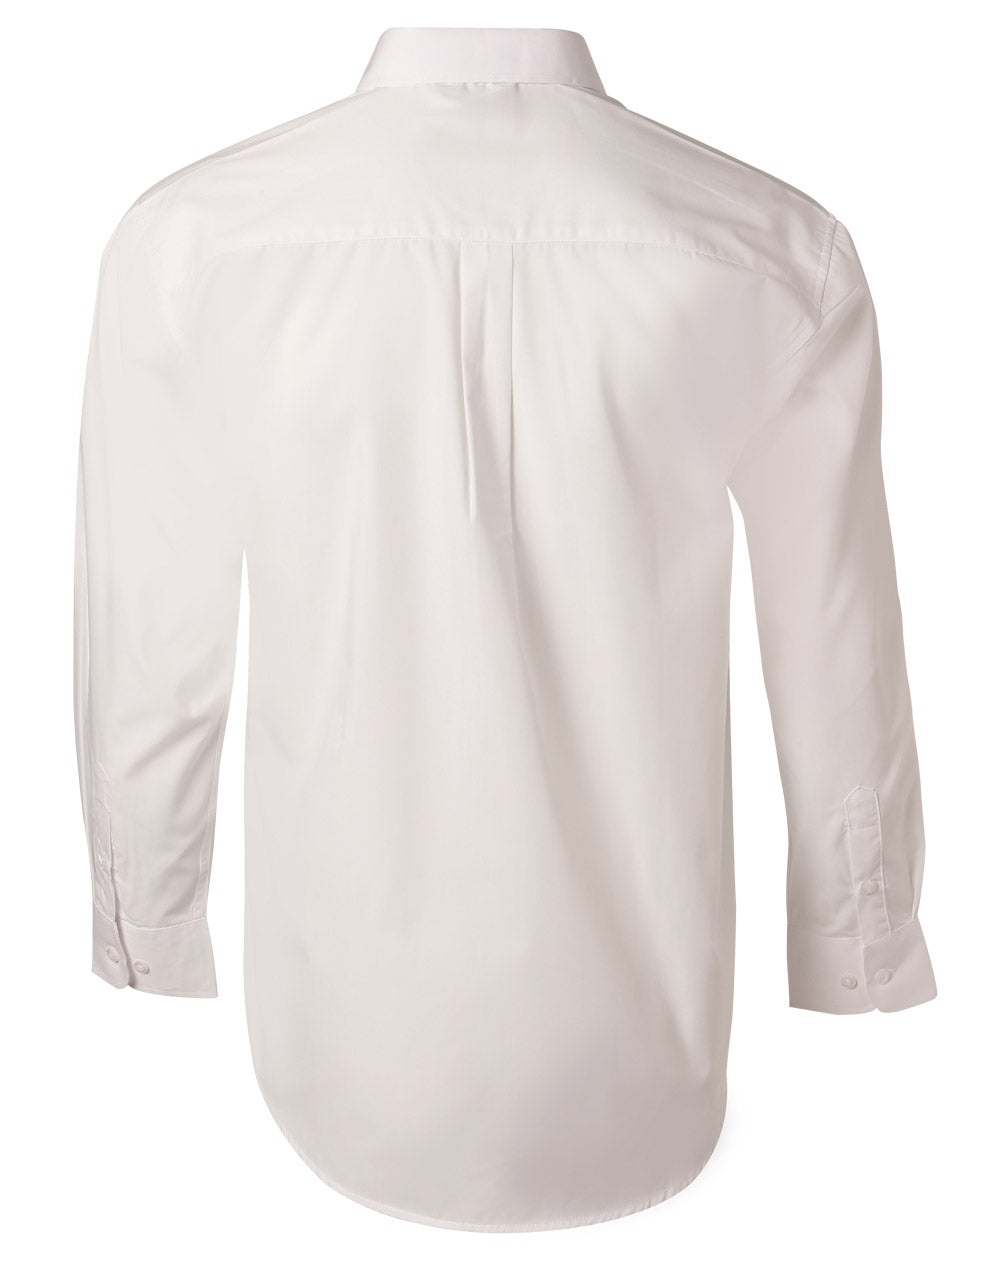 Benchmark BS01L Men's Poplin Long Sleeve Business Shirt